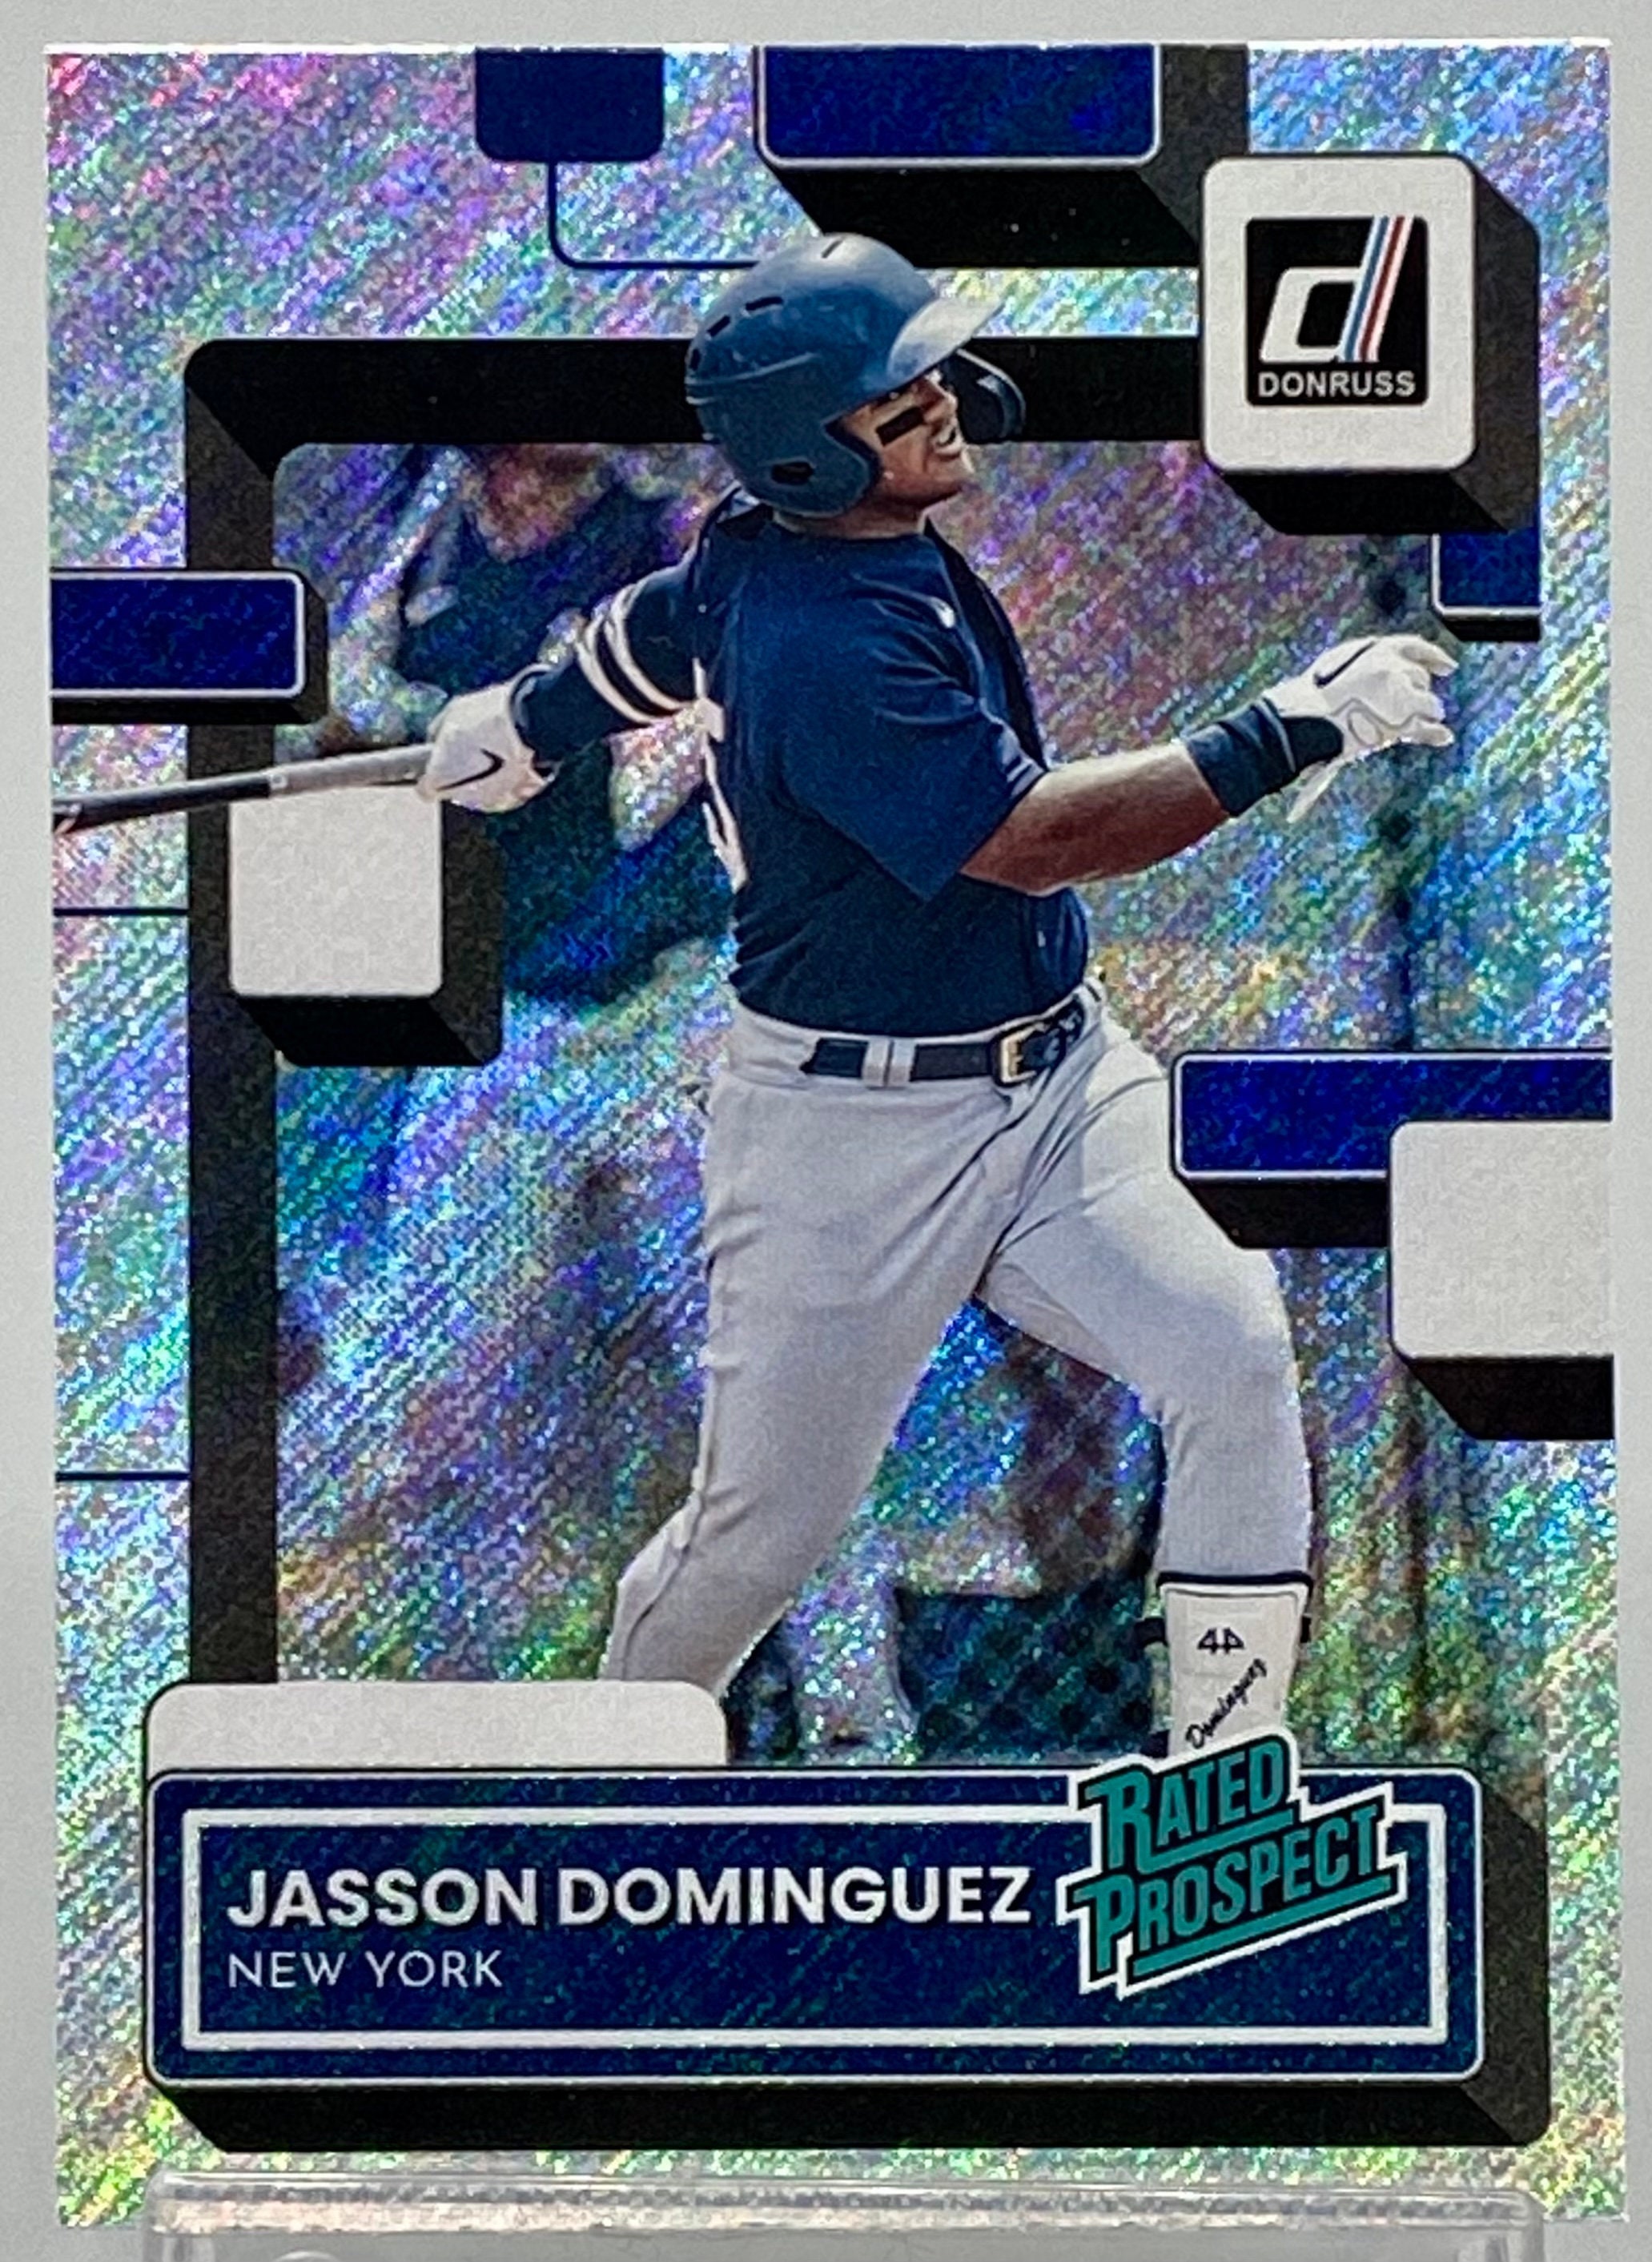 ORIGINAL Jasson Dominguez New York Yankees - Donruss ‘Rated Prospect’  VECTOR Variation Card - Rare - Hot Prospect + FREE Bowman Card!